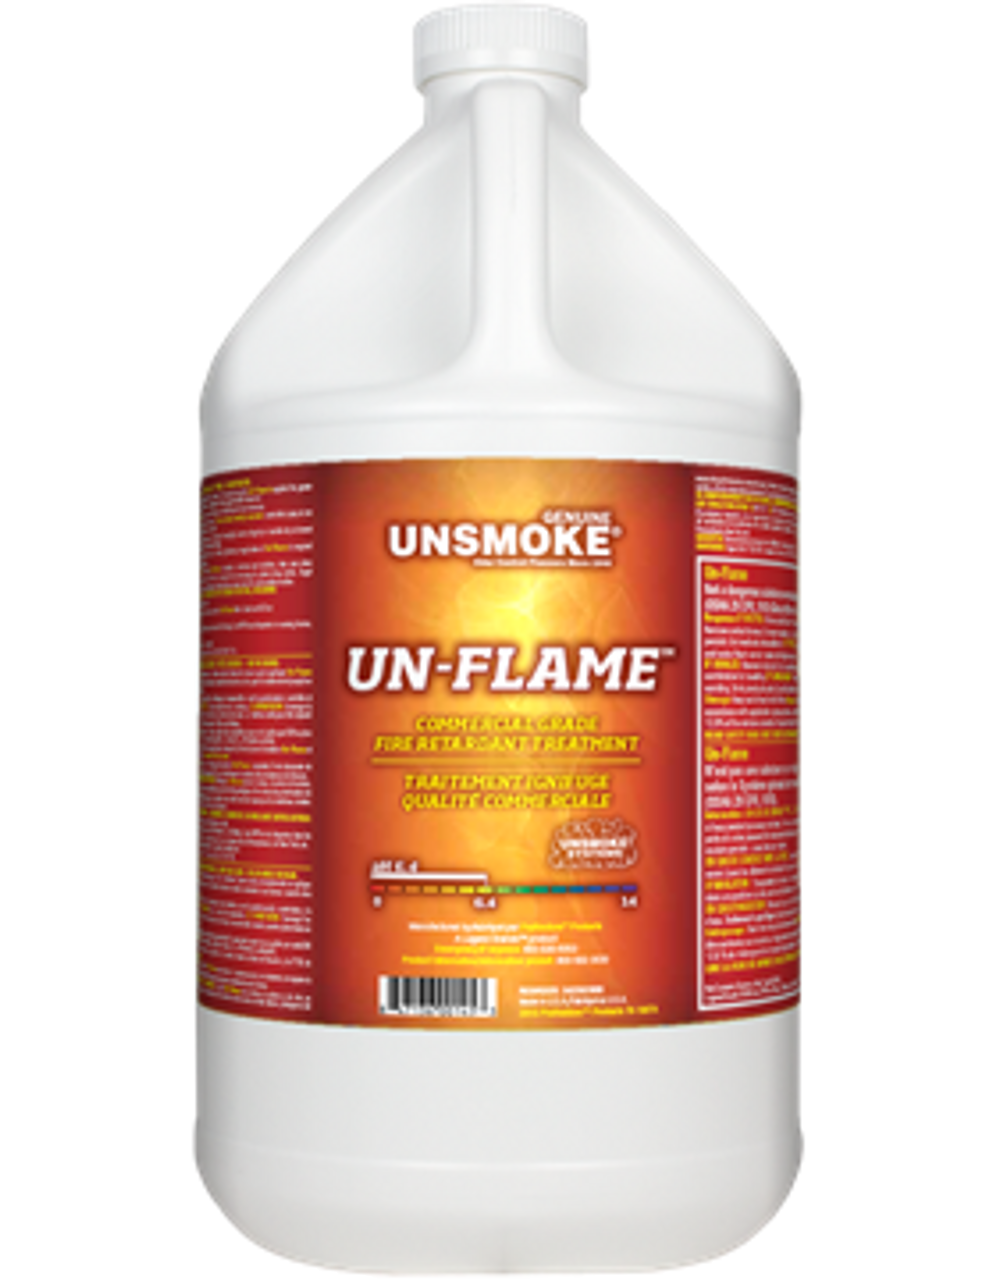 Unsmoke Un-Flame Commercial Grade Fire Retardant Treatment - 1gal - CASE of 4ea